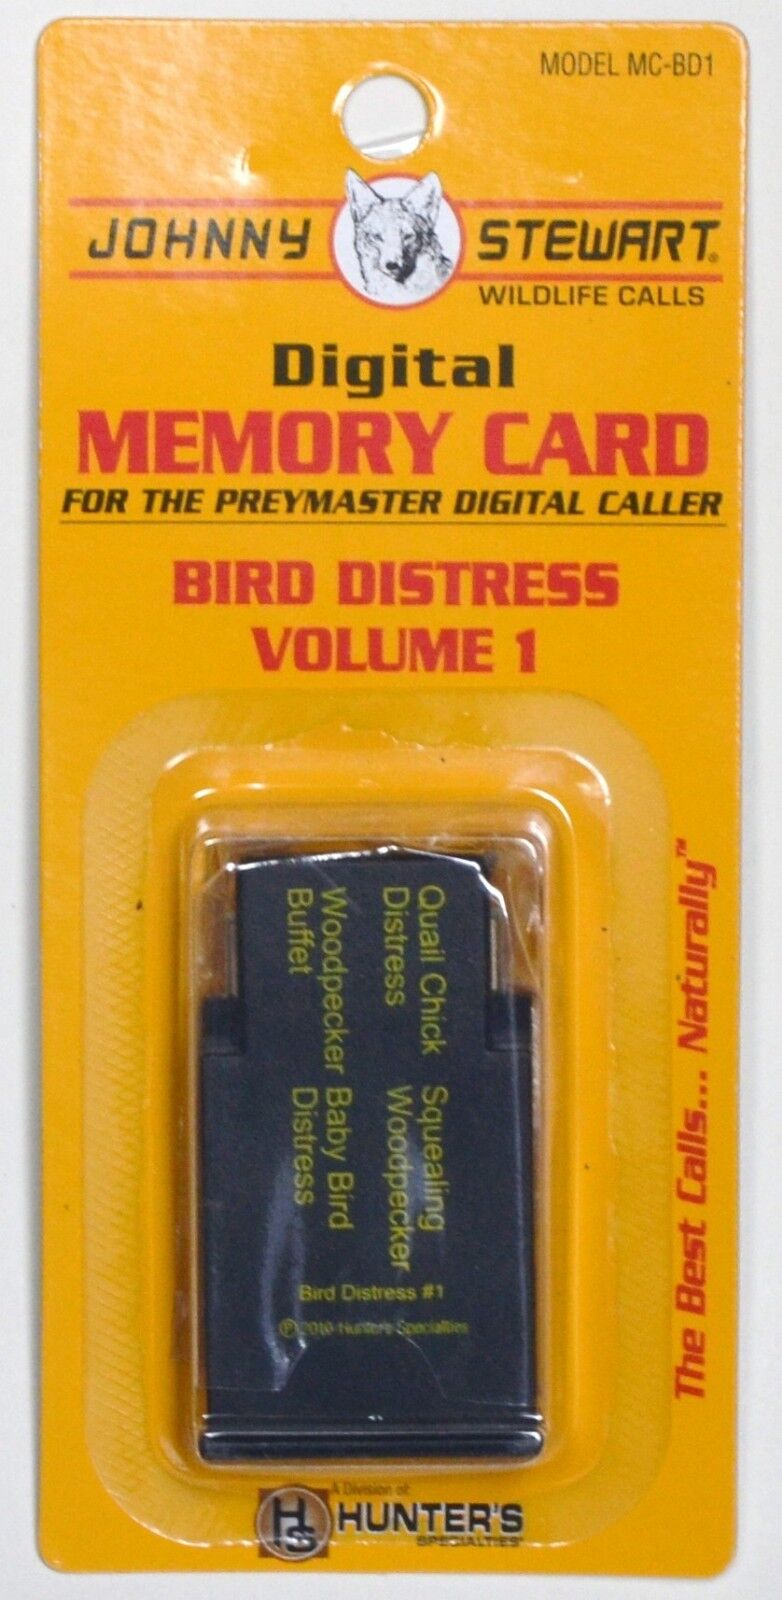 JOHNNY STEWART BIRD DISTRESS VOLUME 1 PREYMASTER MEMORY CARD PM-3 & PM-4 